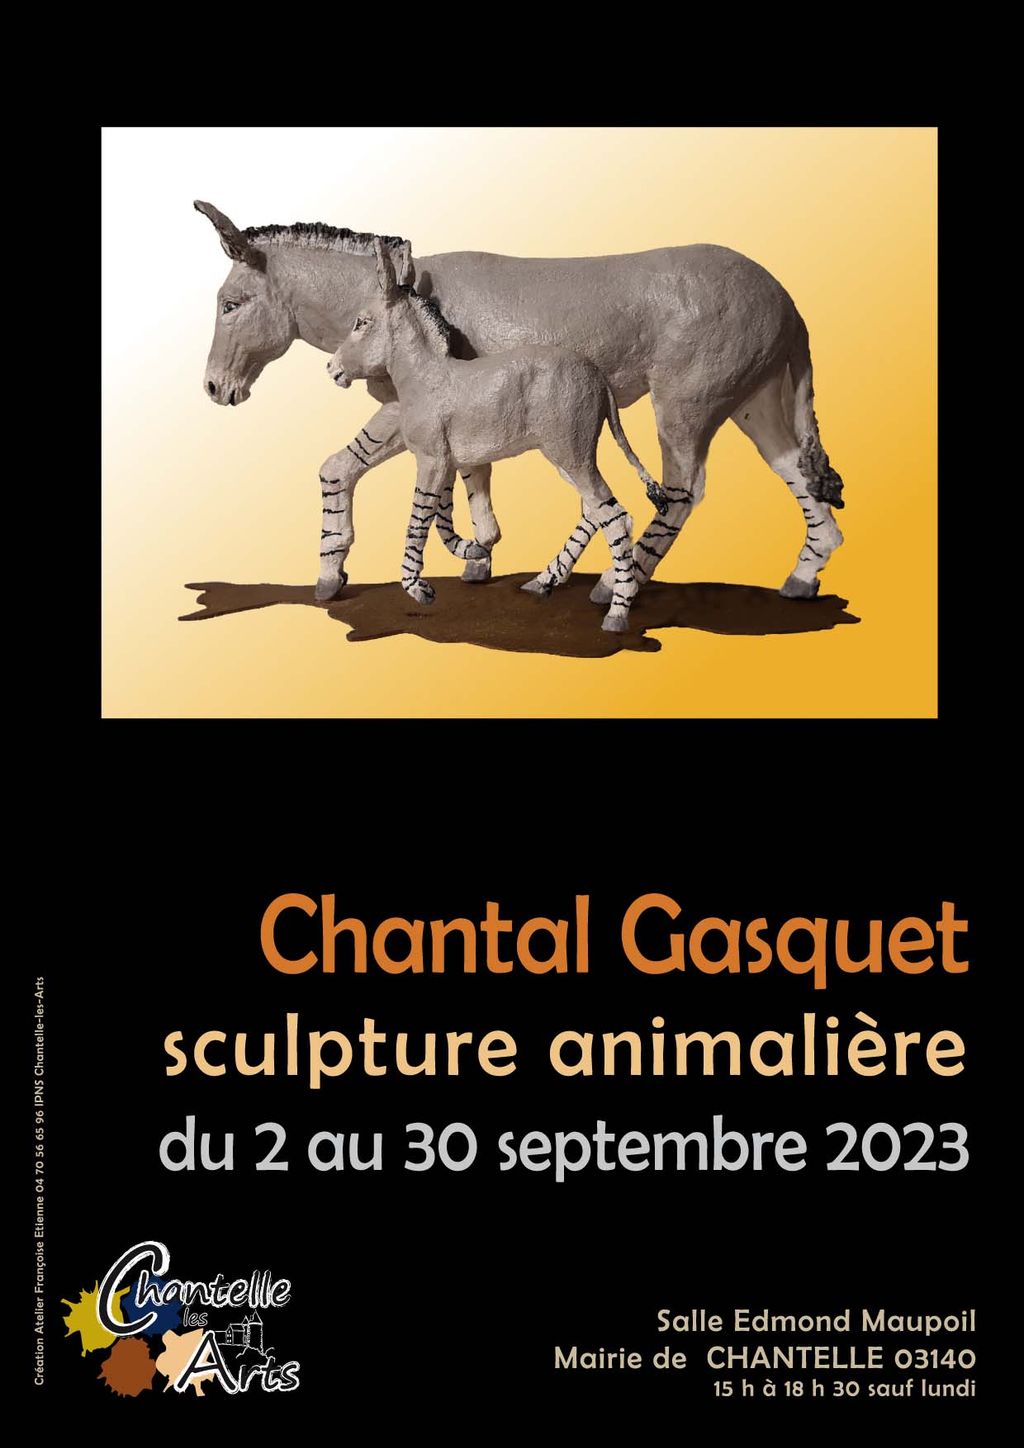 Les sculptures animalières de Chantal Gasquet